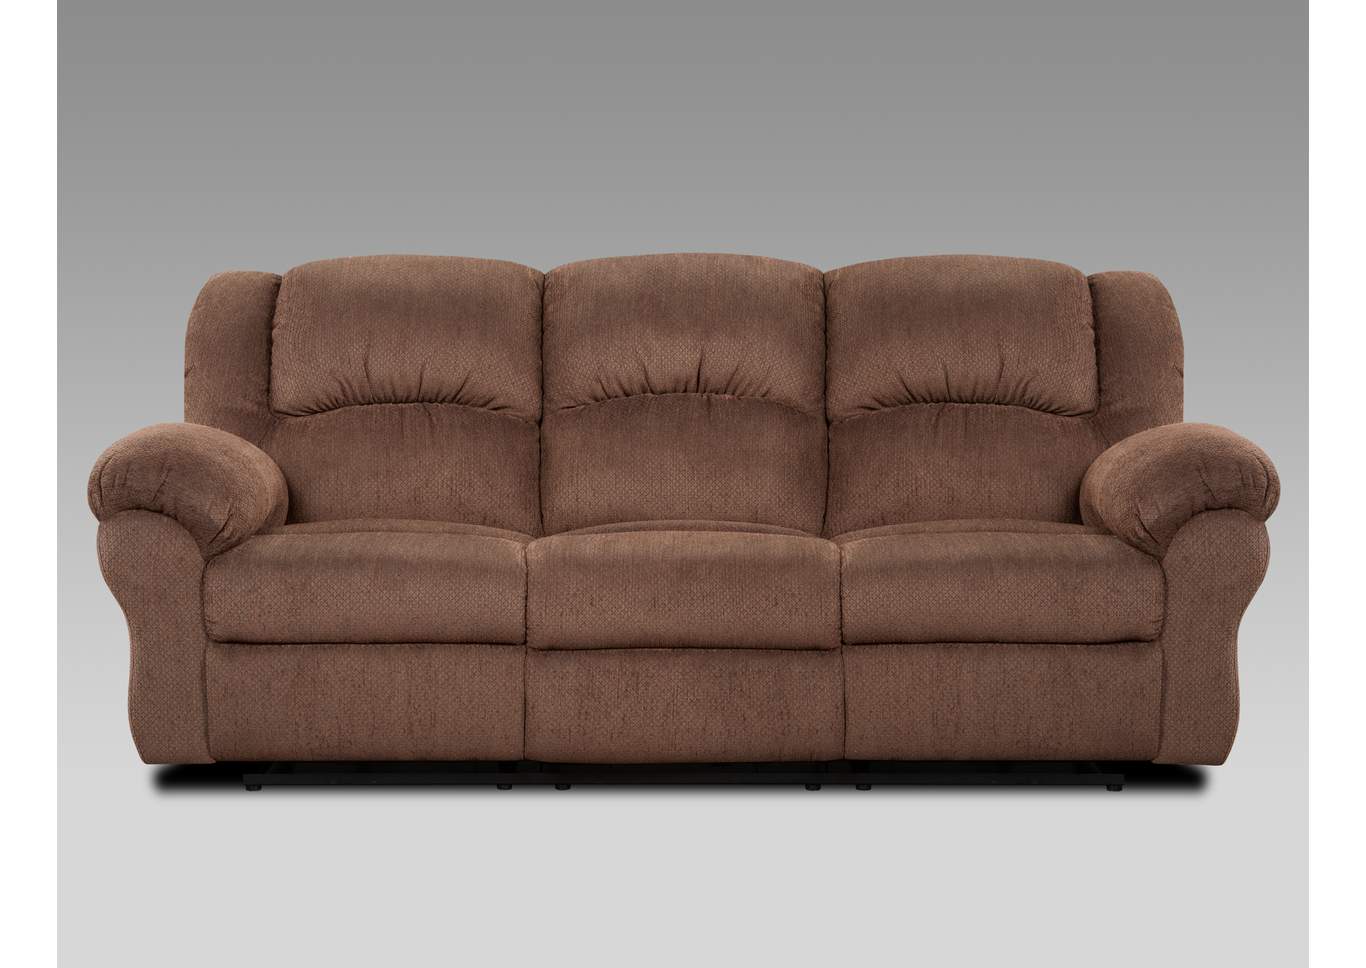 Aspen Chocolate Reclining Sofa,Affordable Furniture